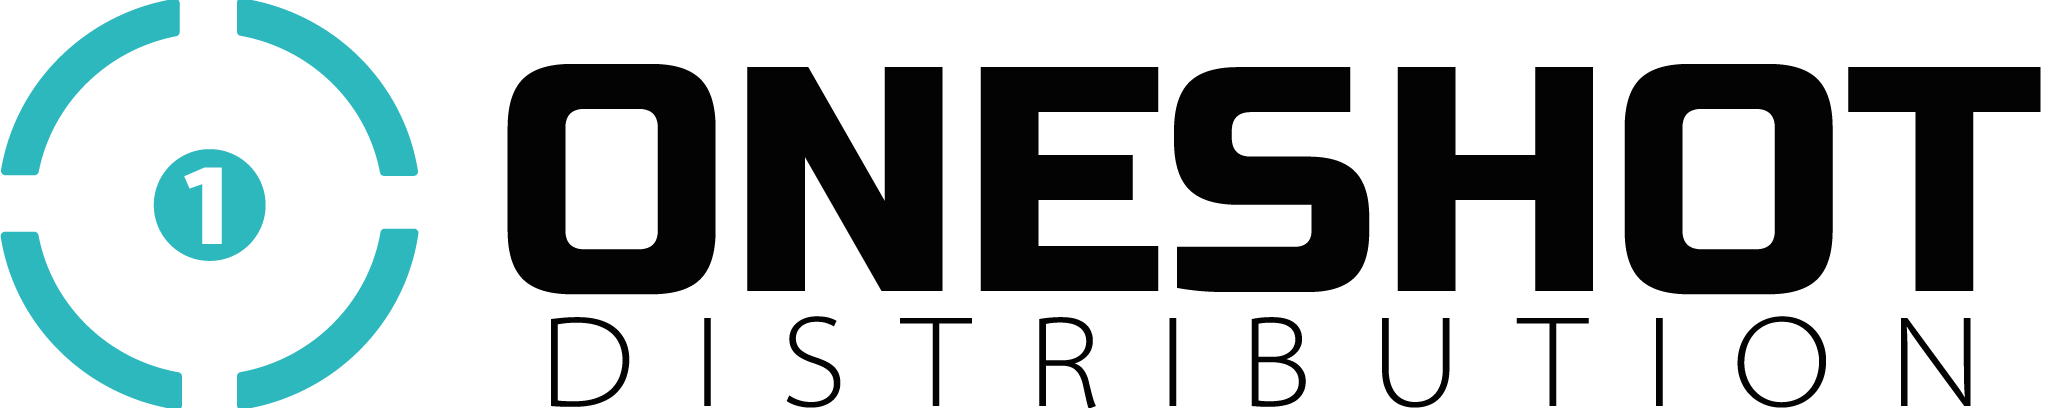 oneshot distribution logo